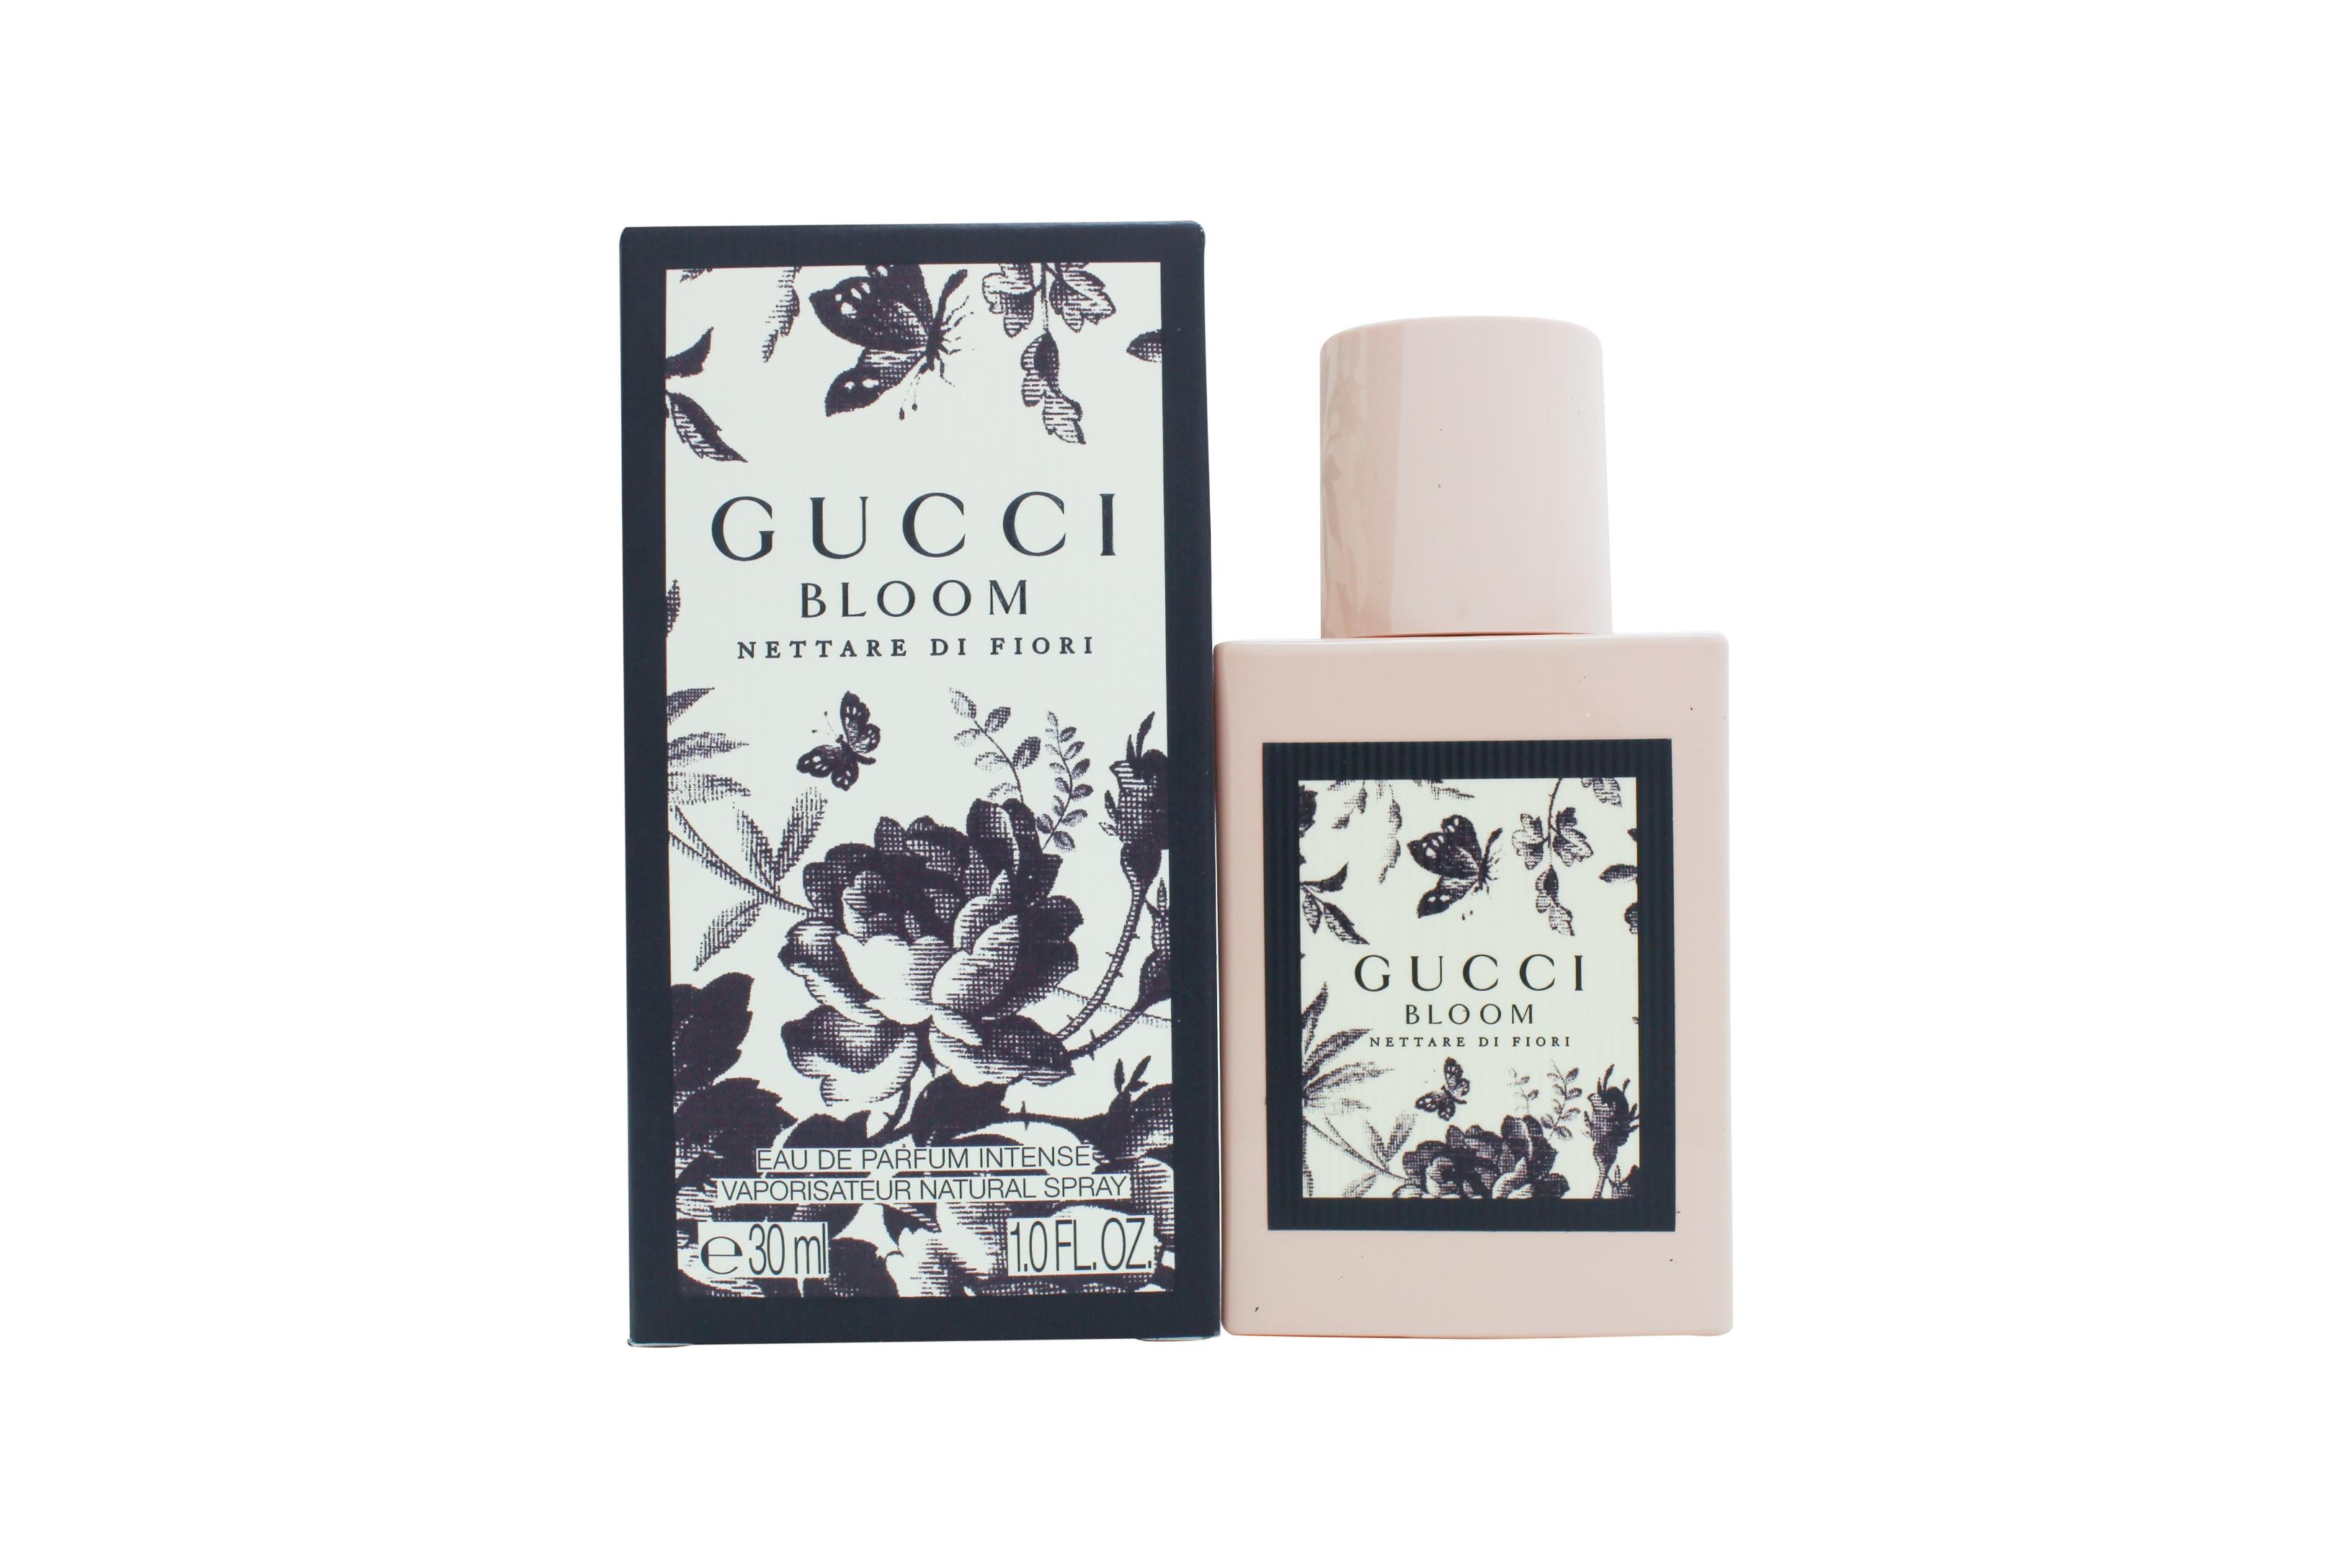 View Gucci Bloom Nettare Di Fiori Eau de Parfum 30ml Spray information